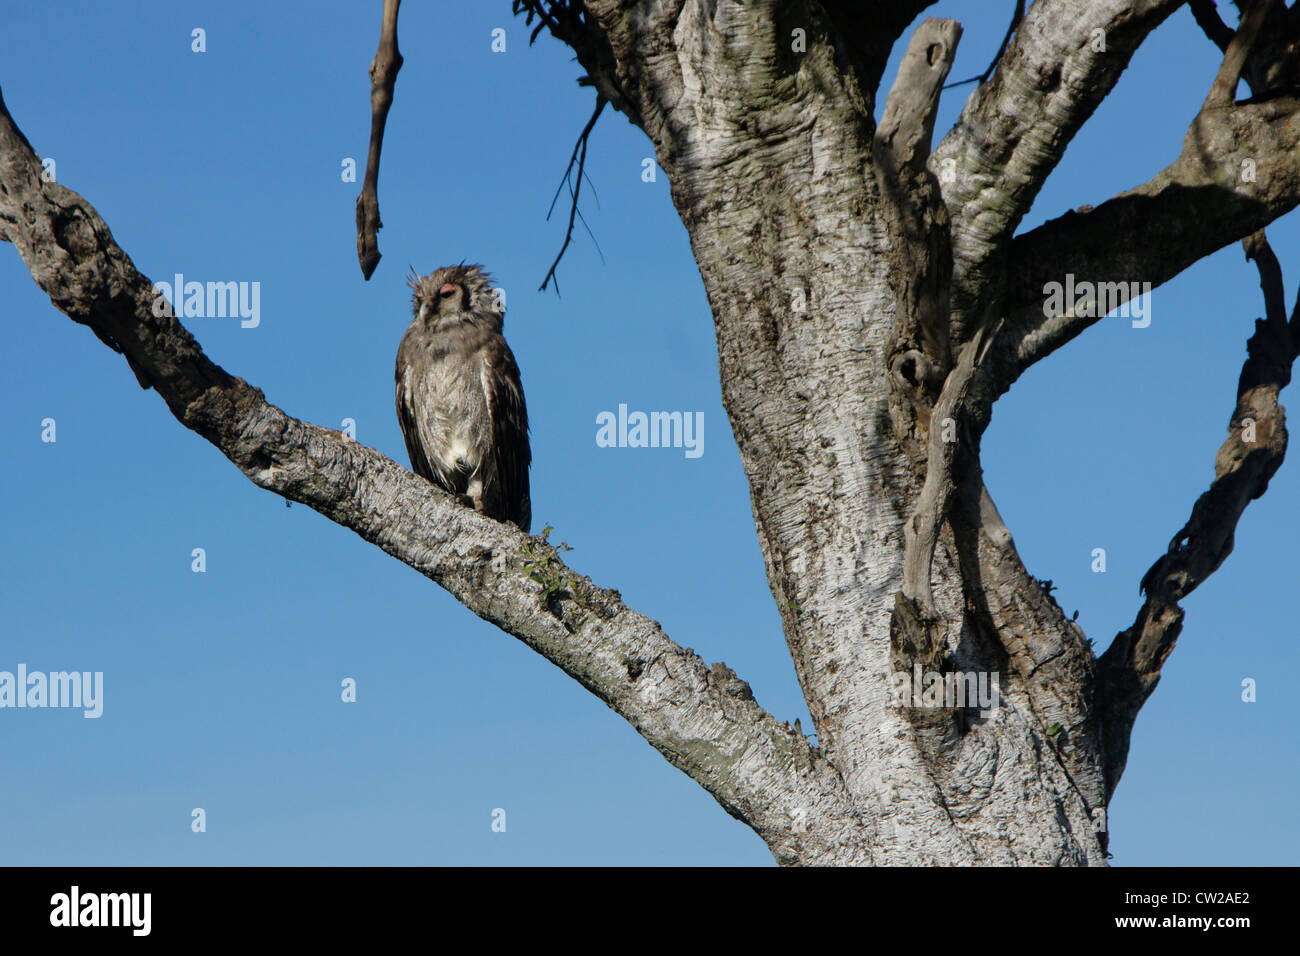 Verreaux's eagle owl sleeping in tree, Masai Mara, Kenya Stock Photo